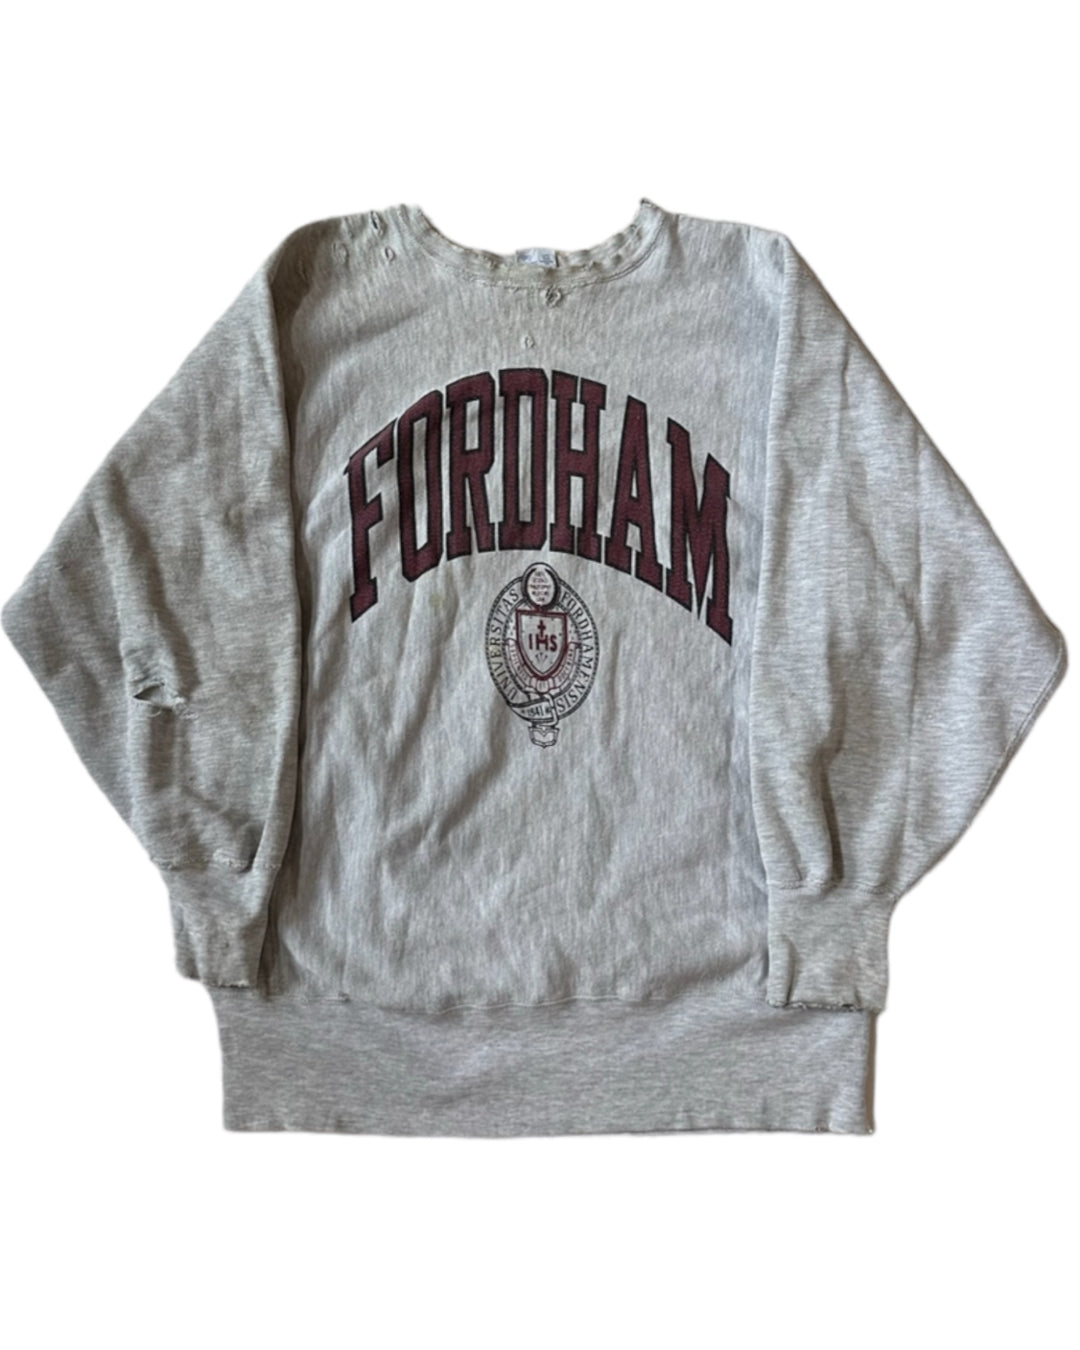 Fordham Vintage Sweatshirt